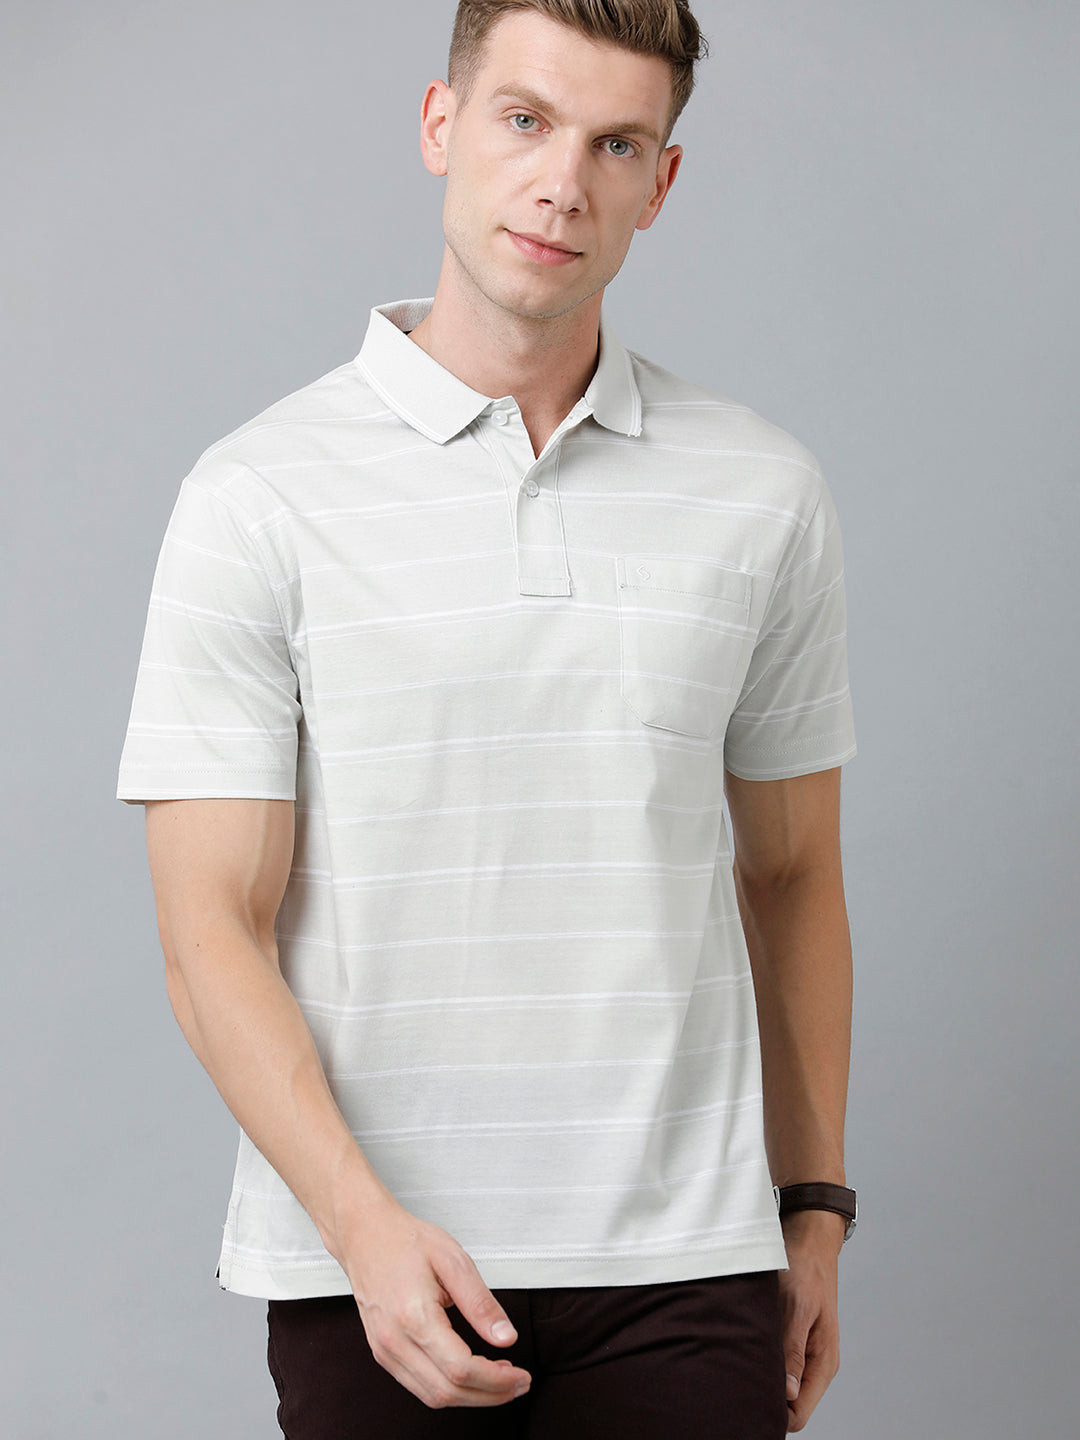 Classic Polo Men's Cotton Half Sleeve Striped Authentic Fit Polo Neck Light Grey Color T-Shirt | Ap - 88 A